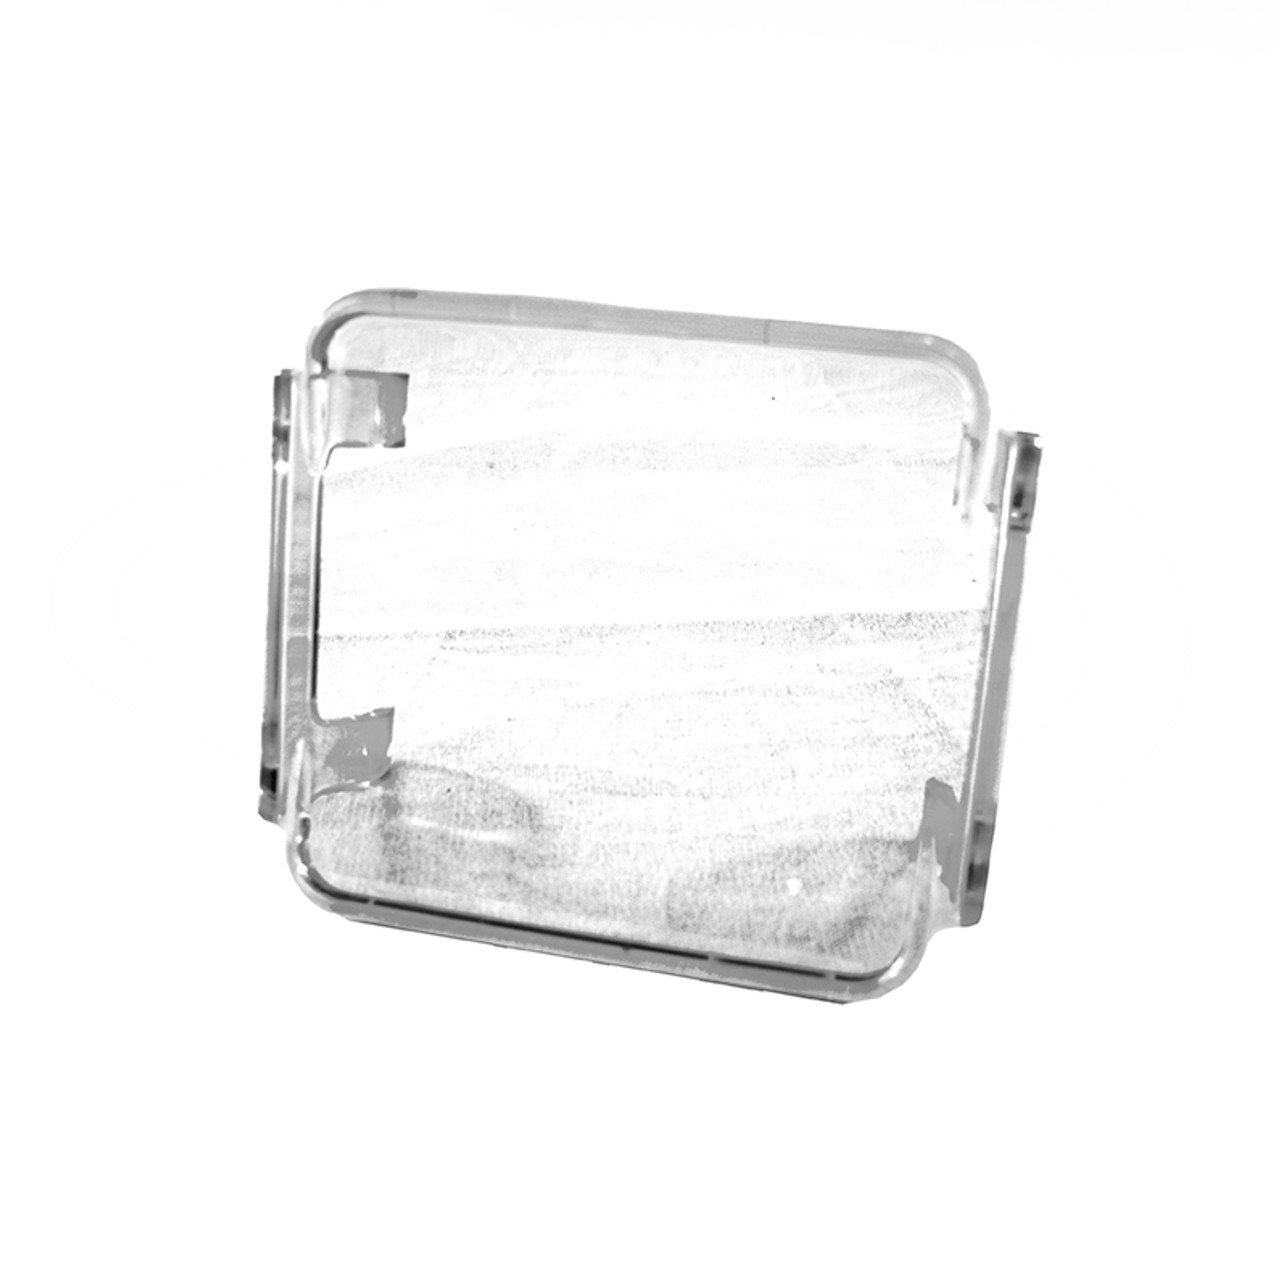 Translucent 3x3 Inch Protective Spotlight Cover White Race Sport Lighting